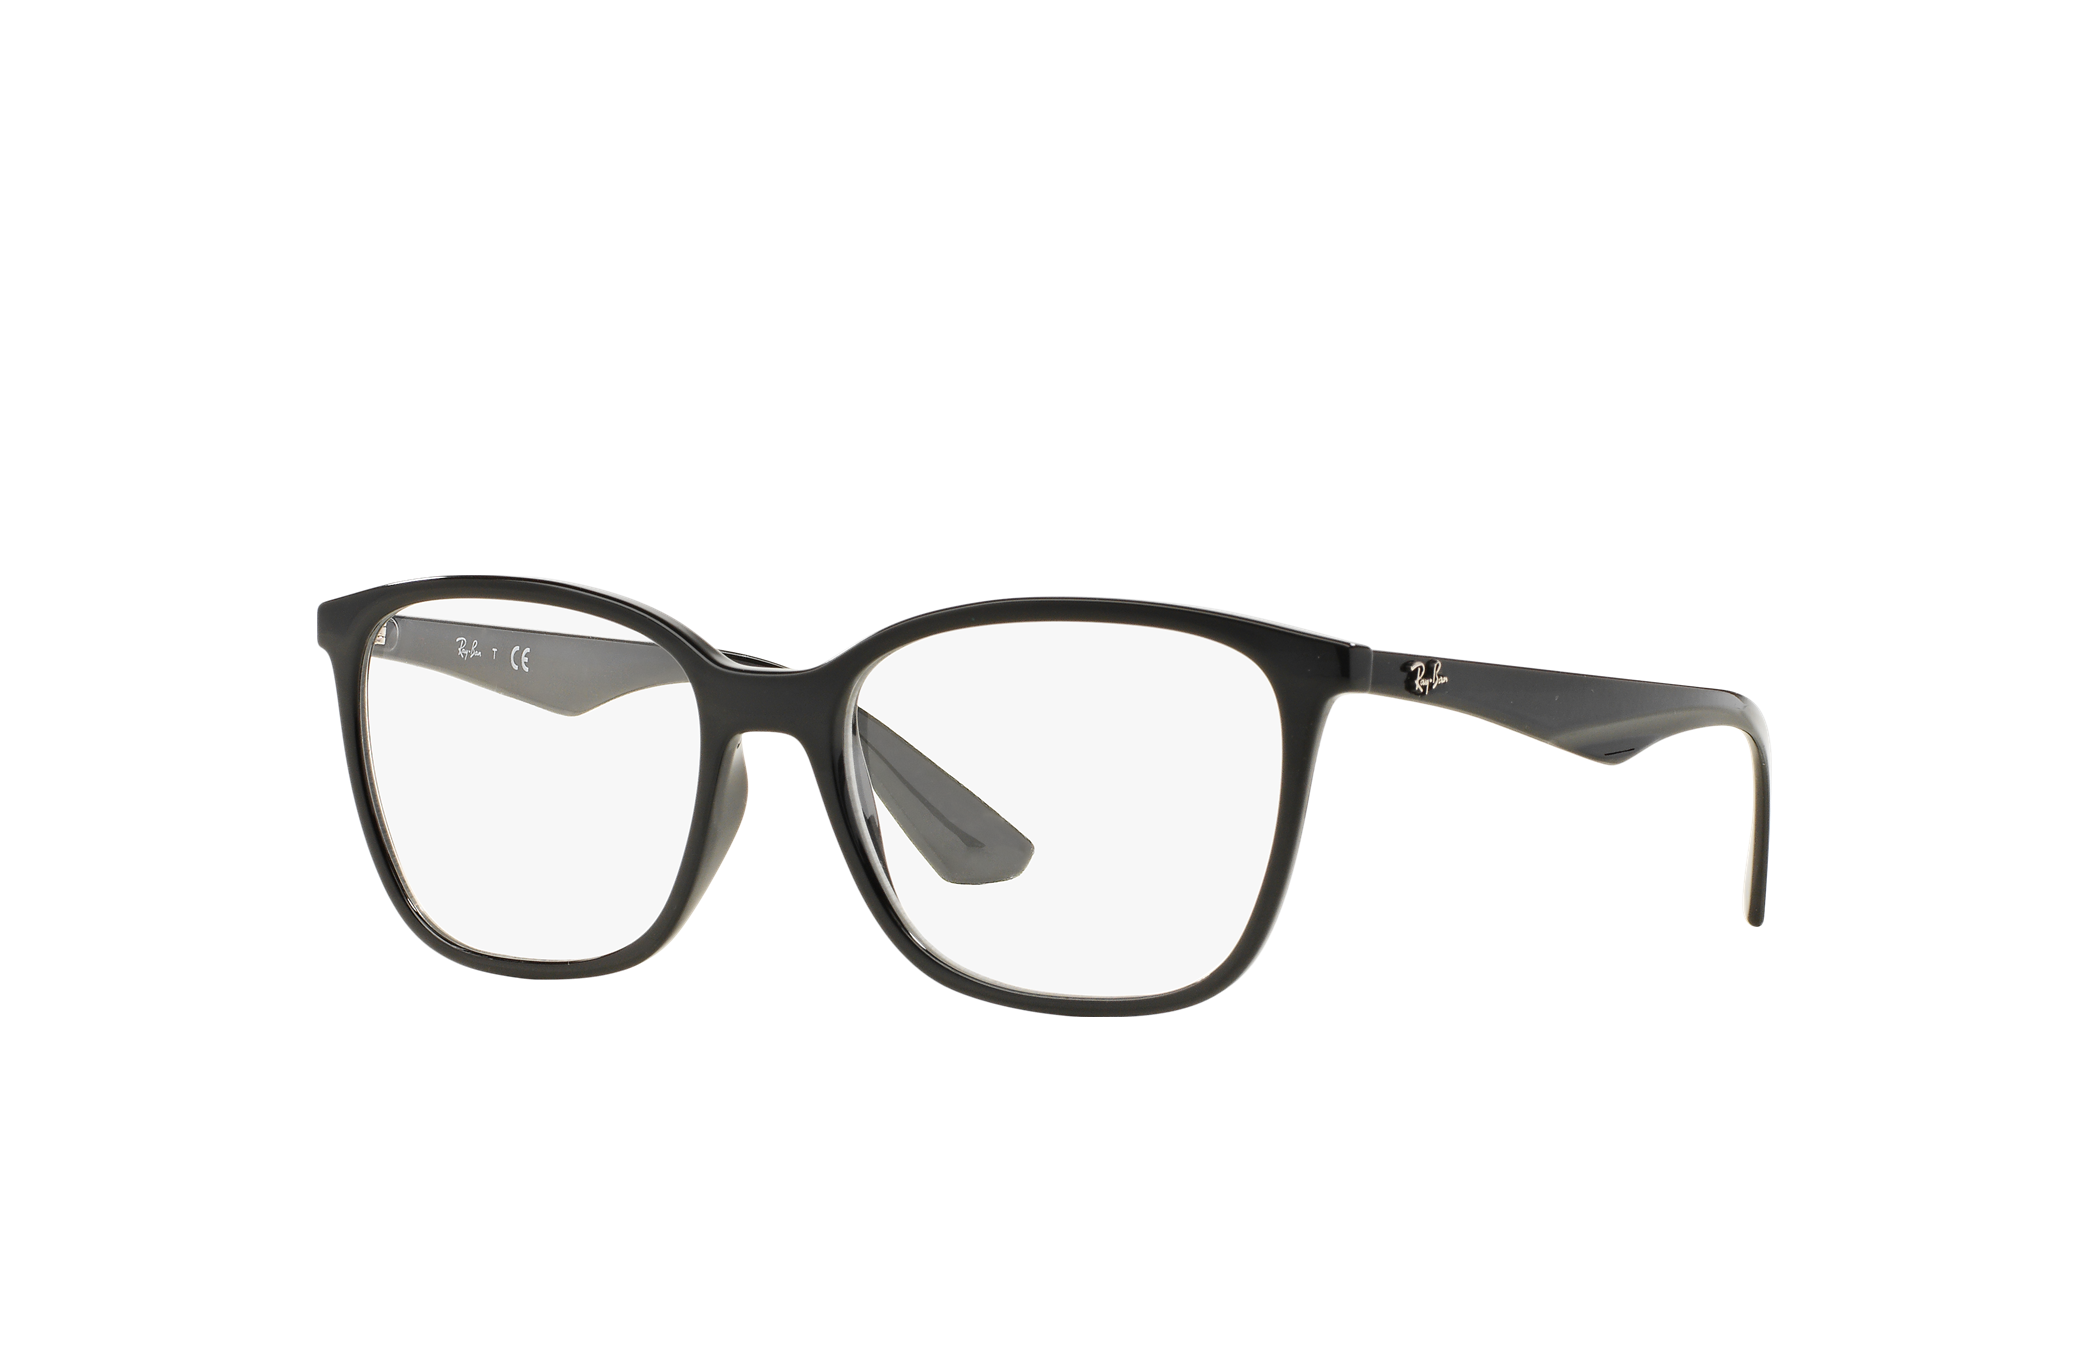 Rb7066f Eyeglasses with Black Frame - RB7066F | Ray-Ban®